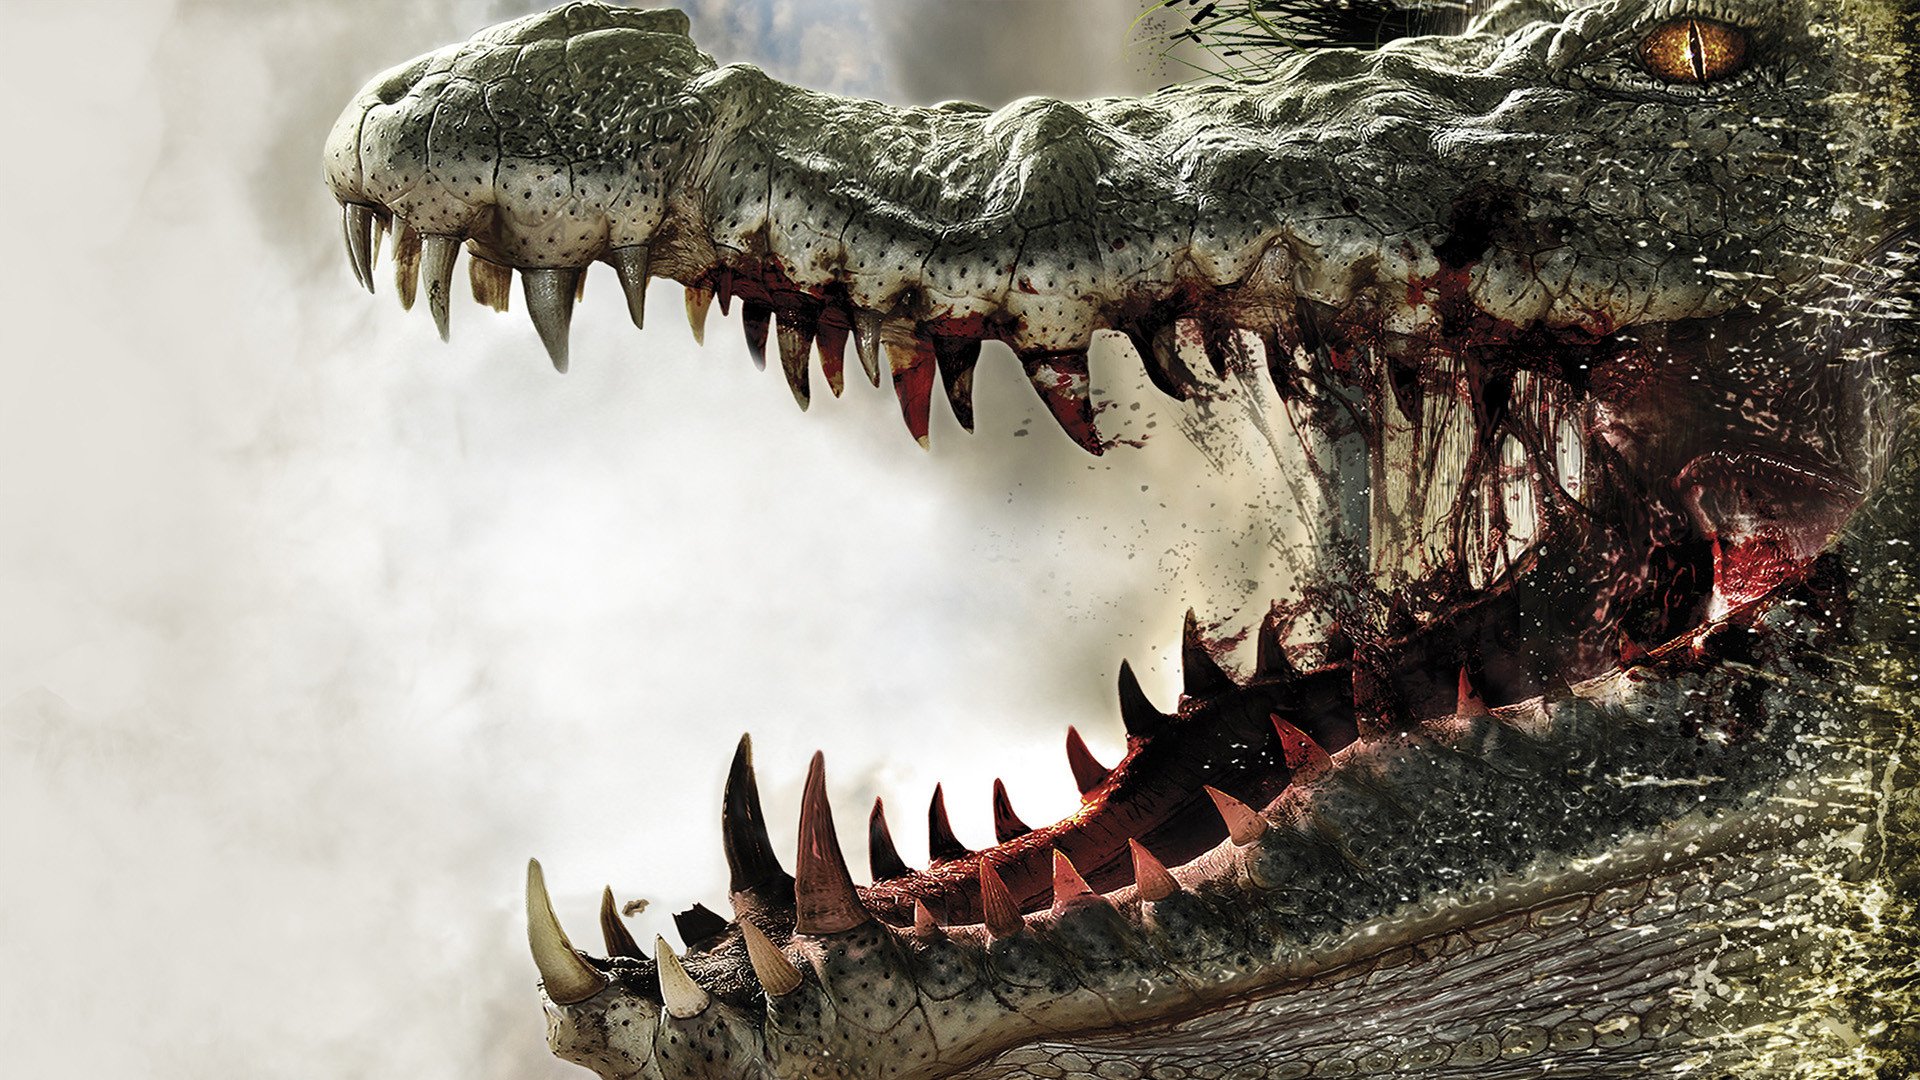 Alligator HD Wallpaper Background Image